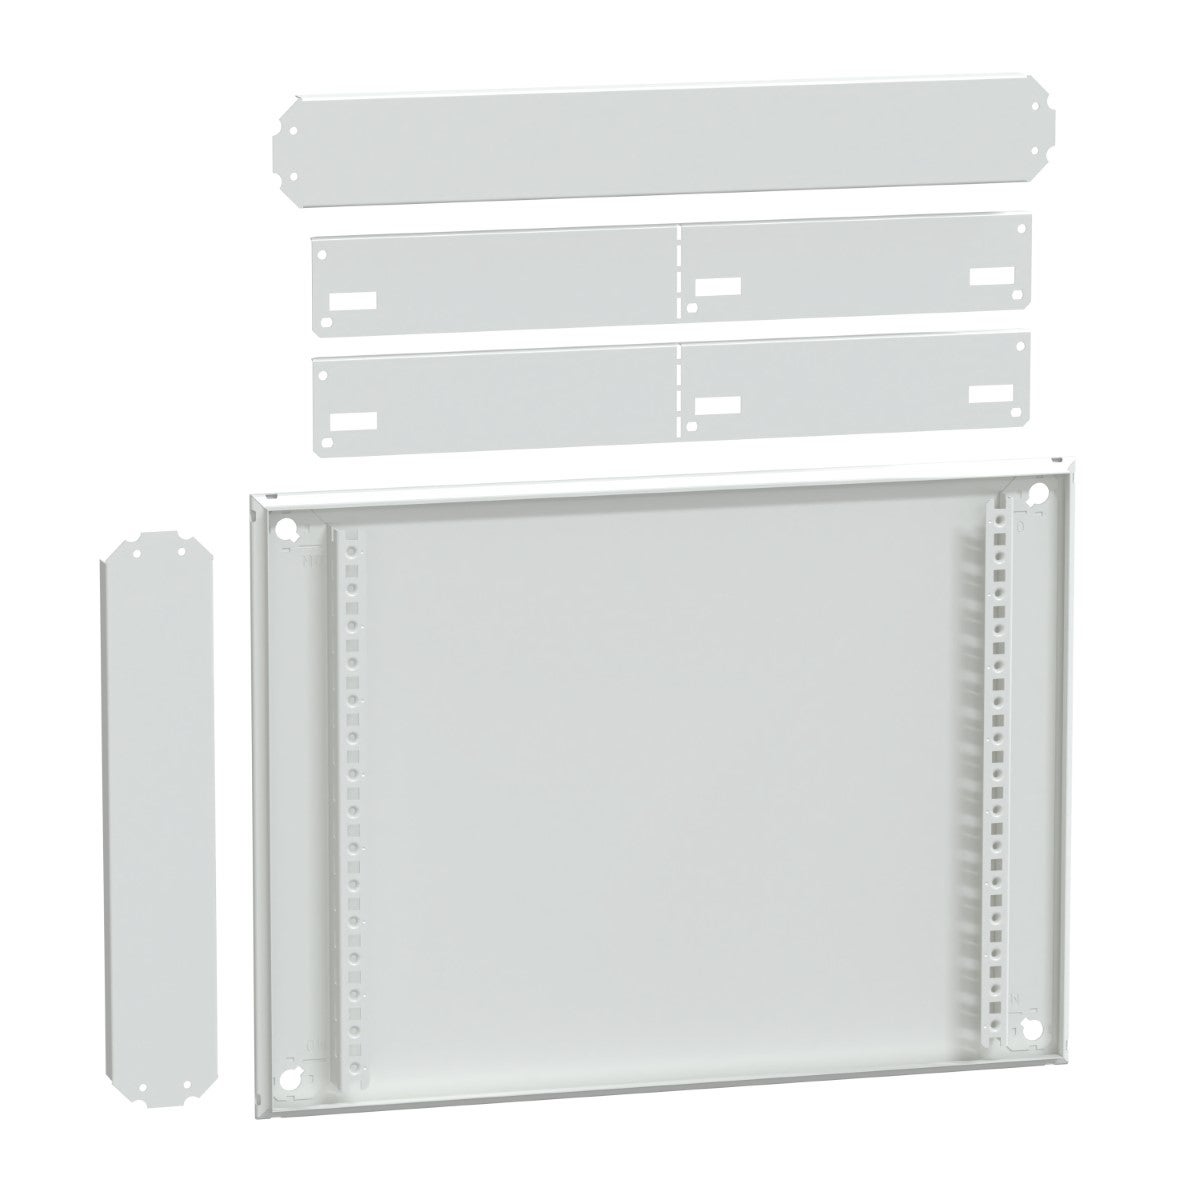 Rear panel, PrismaSeT G, for extension enclosure, 7M, W600mm, H450mm, IP55